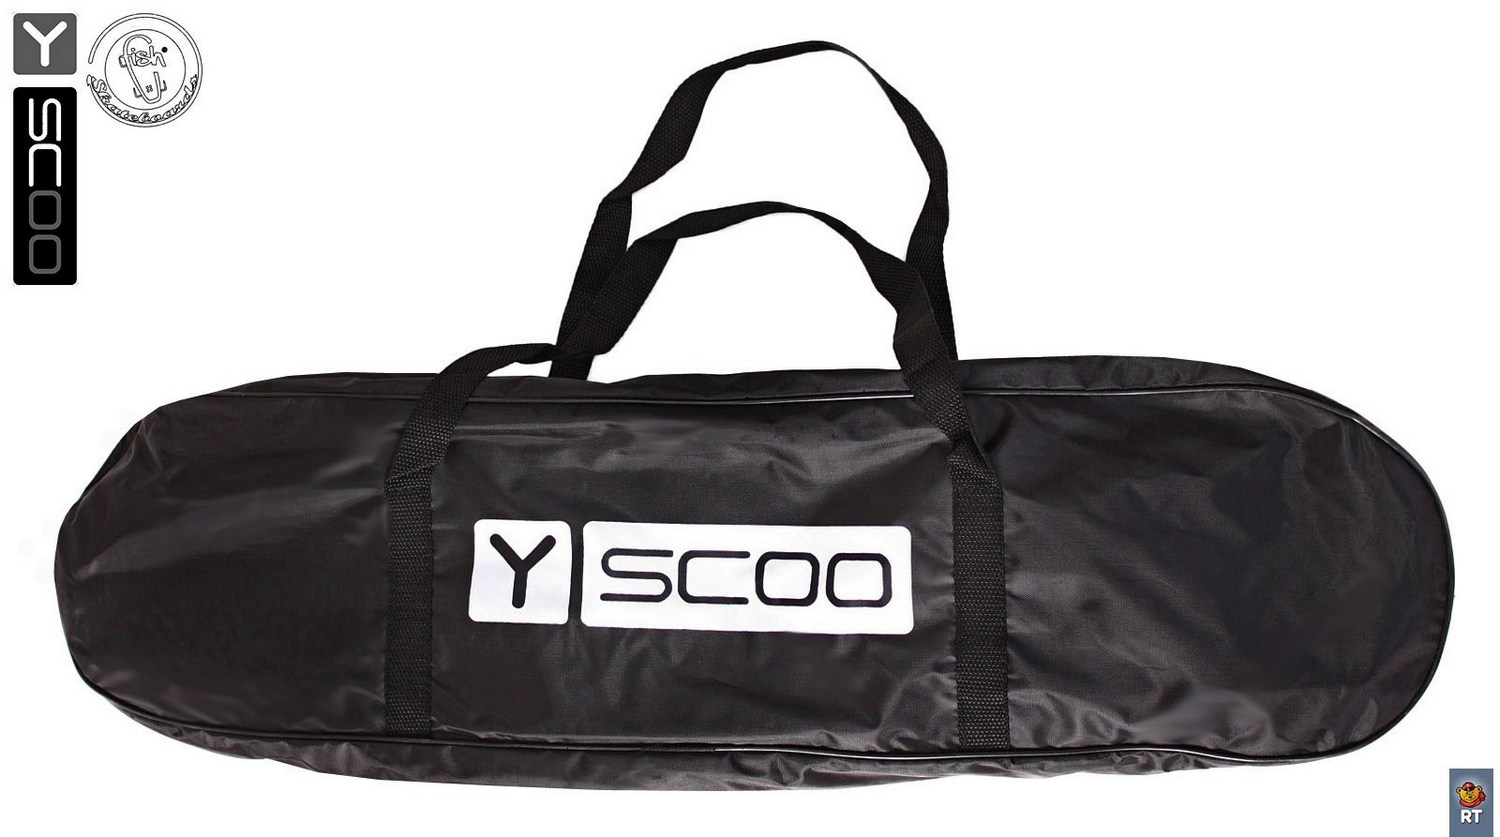 Скейтборд виниловый Y-Scoo Fishskateboard Print 22" 401G-С с сумкой, дизайн Карикатура  